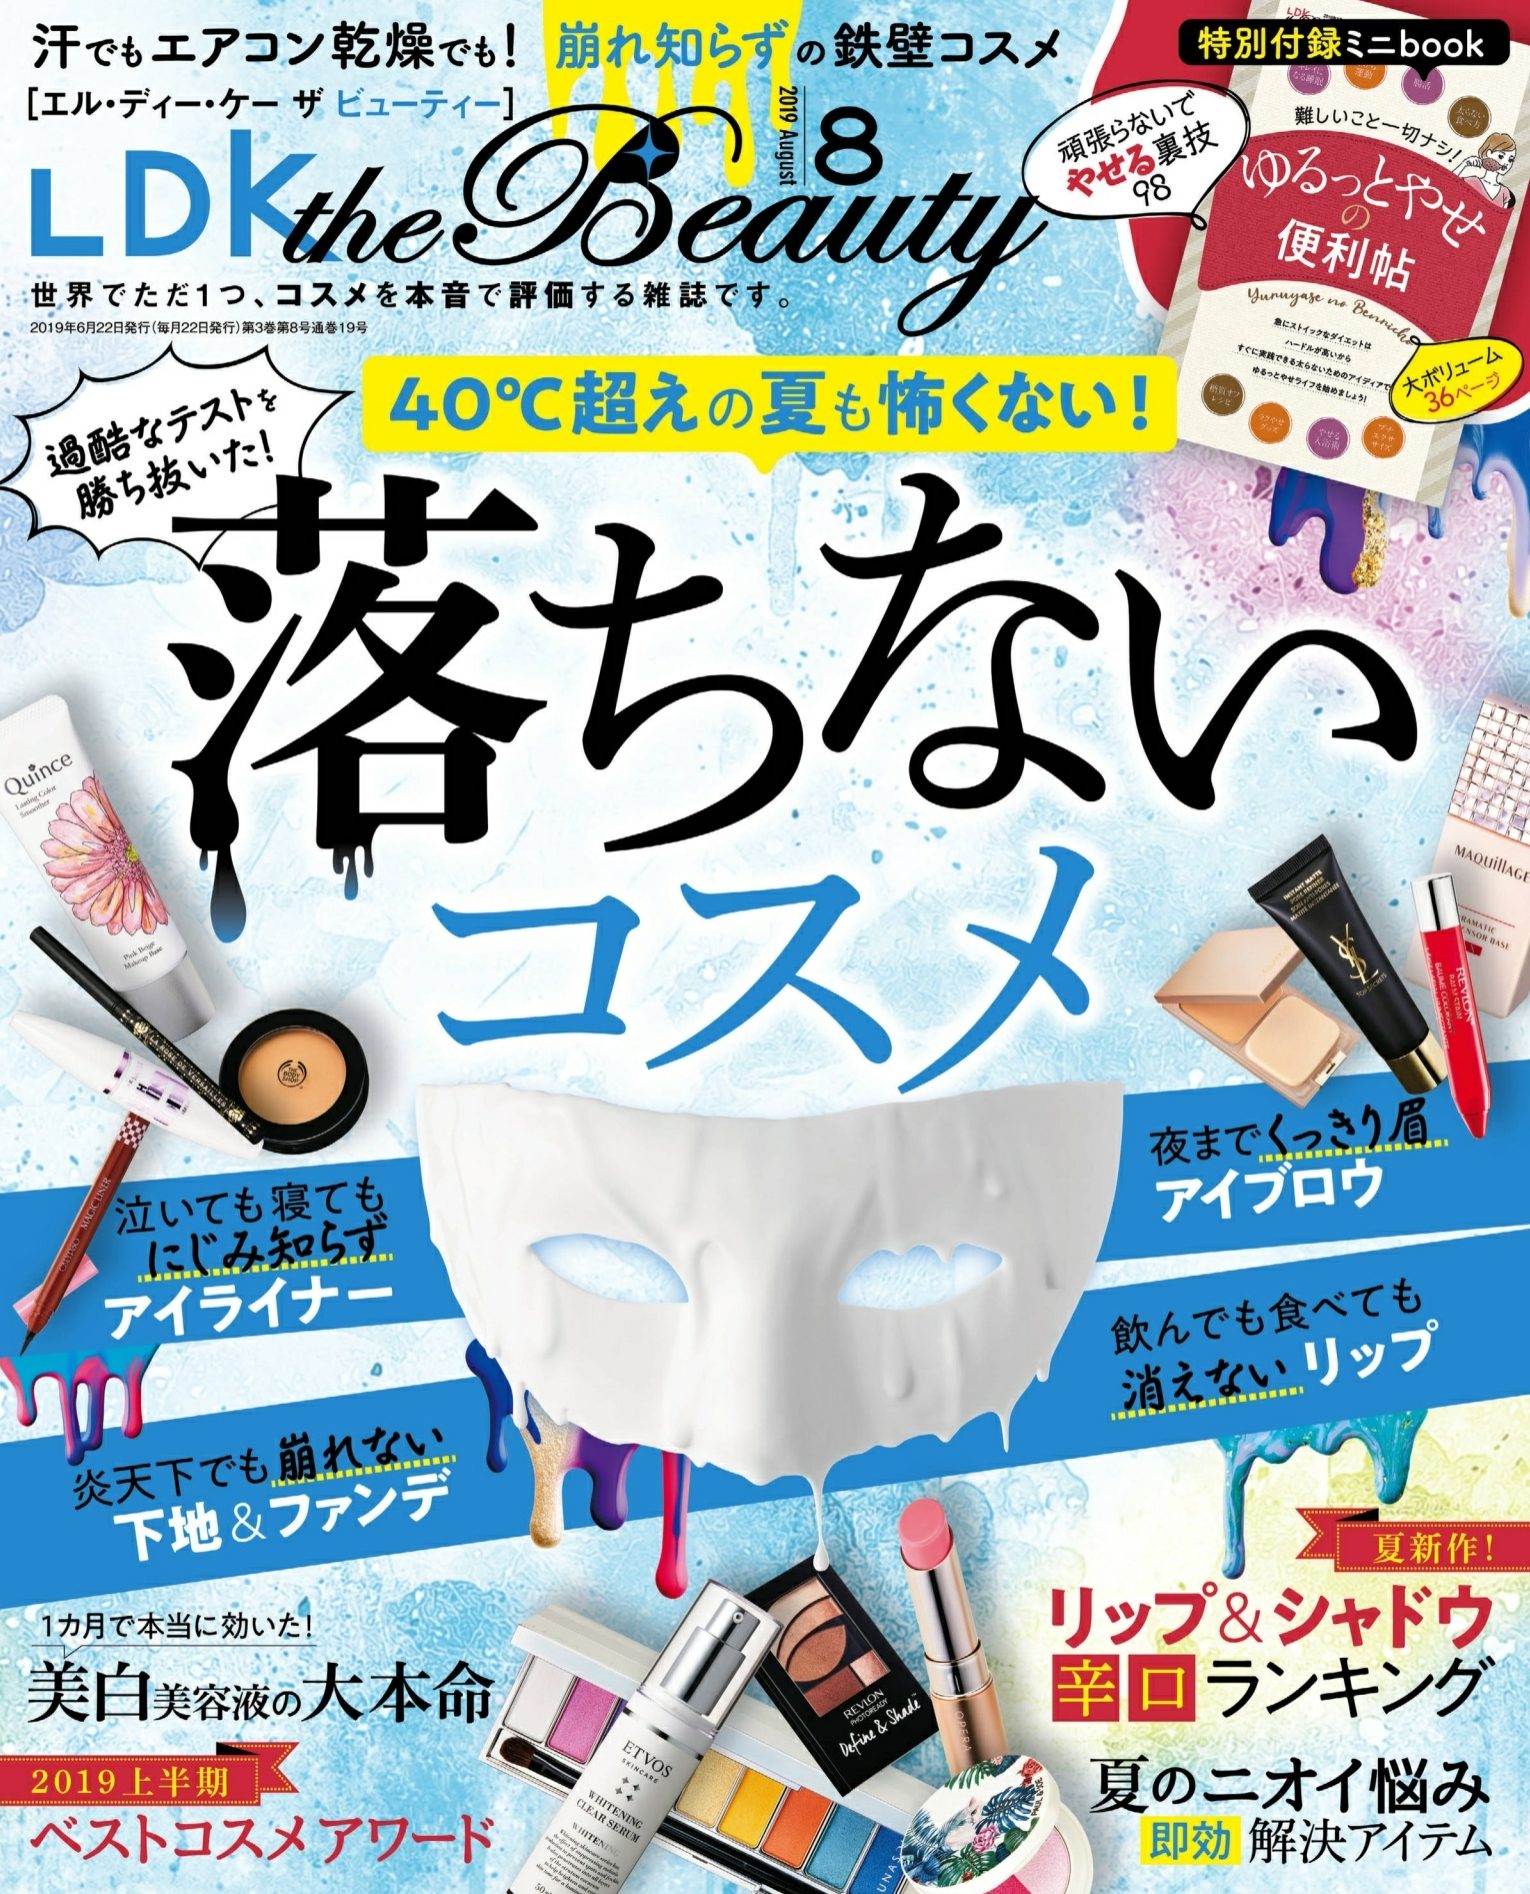 『LDK the Beauty』2019.8月号表紙